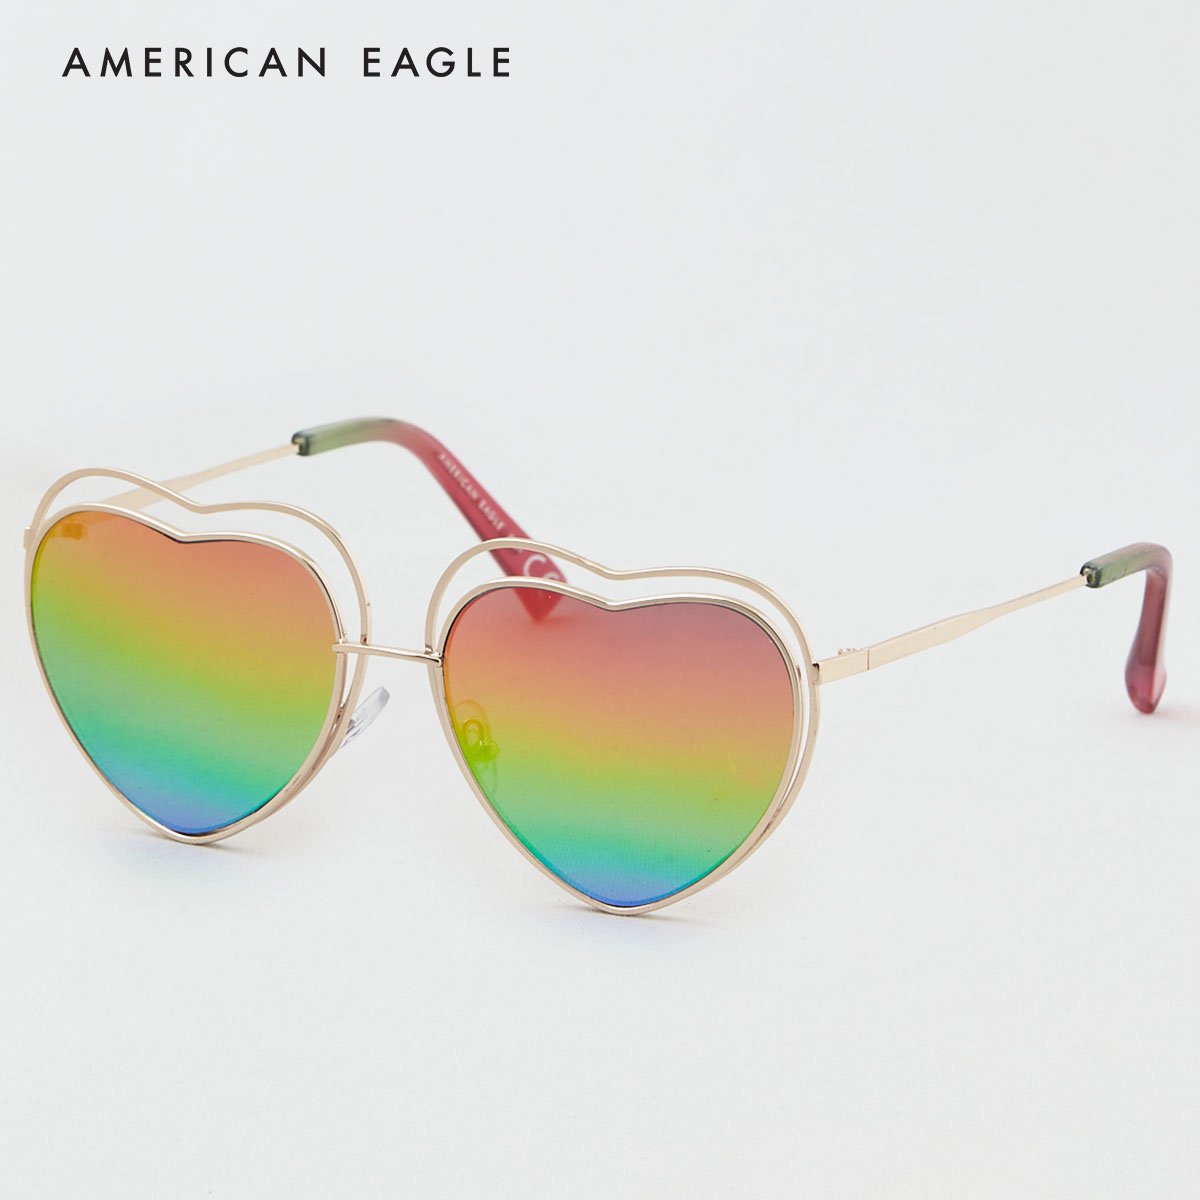 American Eagle Rainbow Heart Sunglasses แว่นตา ผู้หญิง แฟชั่น(048-8601-900)